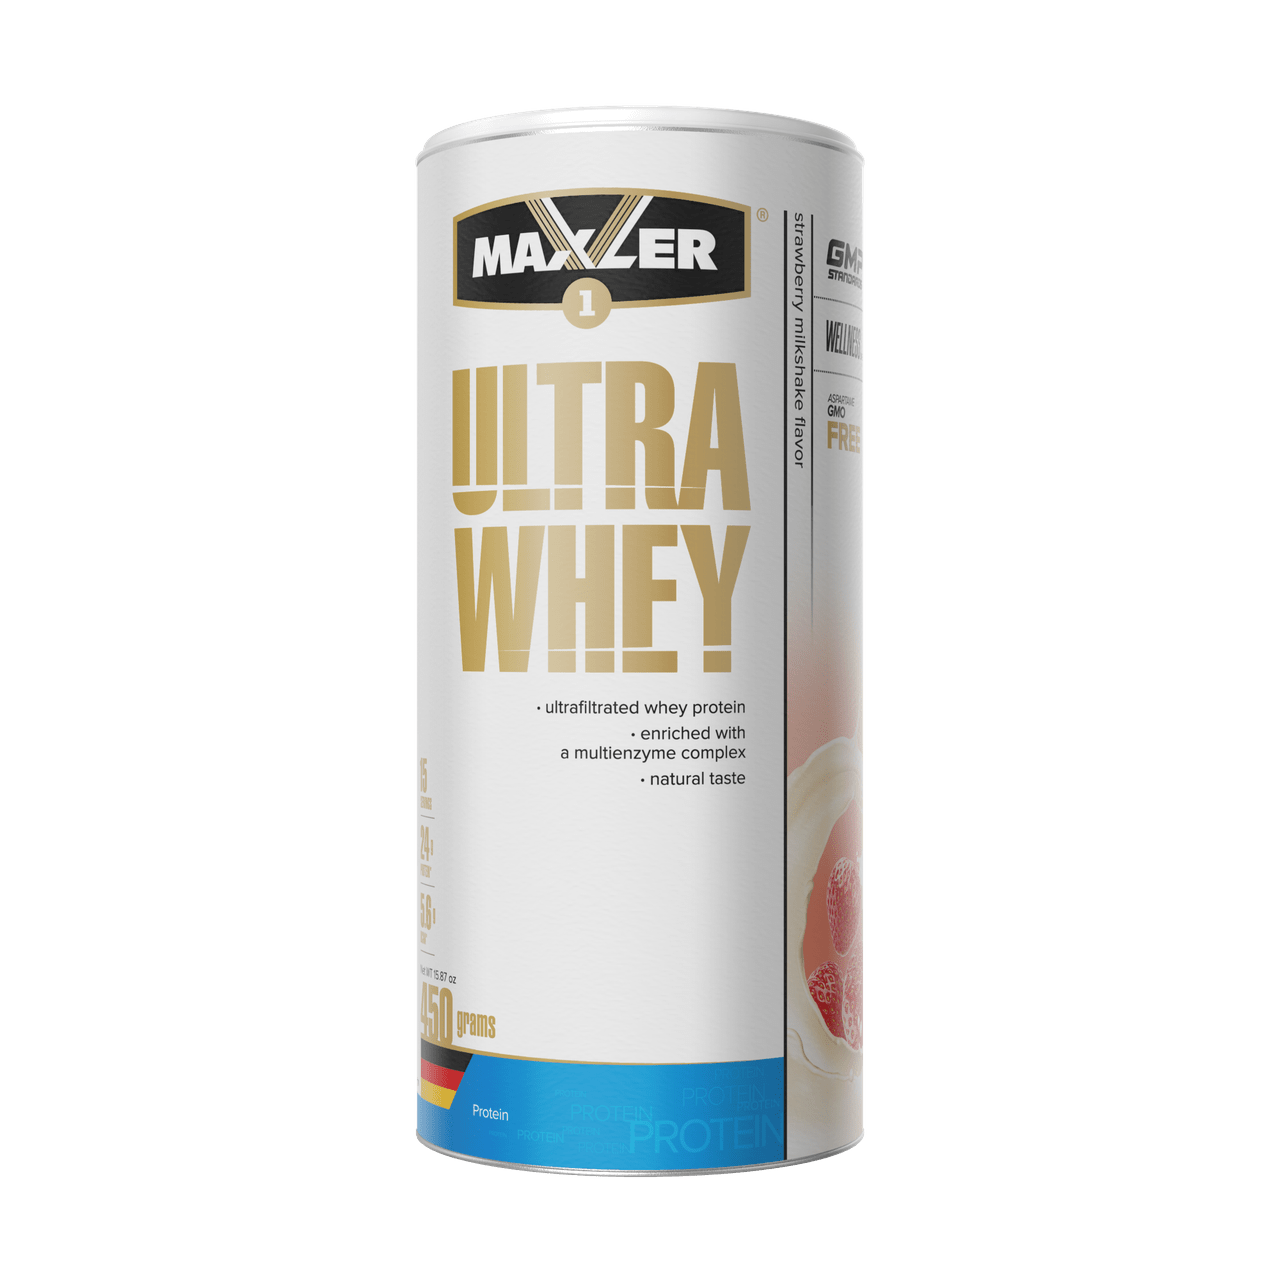 Комплексный протеин Maxler Ultra Whey (450 г) макслер ультра вей strawberry milkshake,  мл, Maxler. Комплексный протеин. 